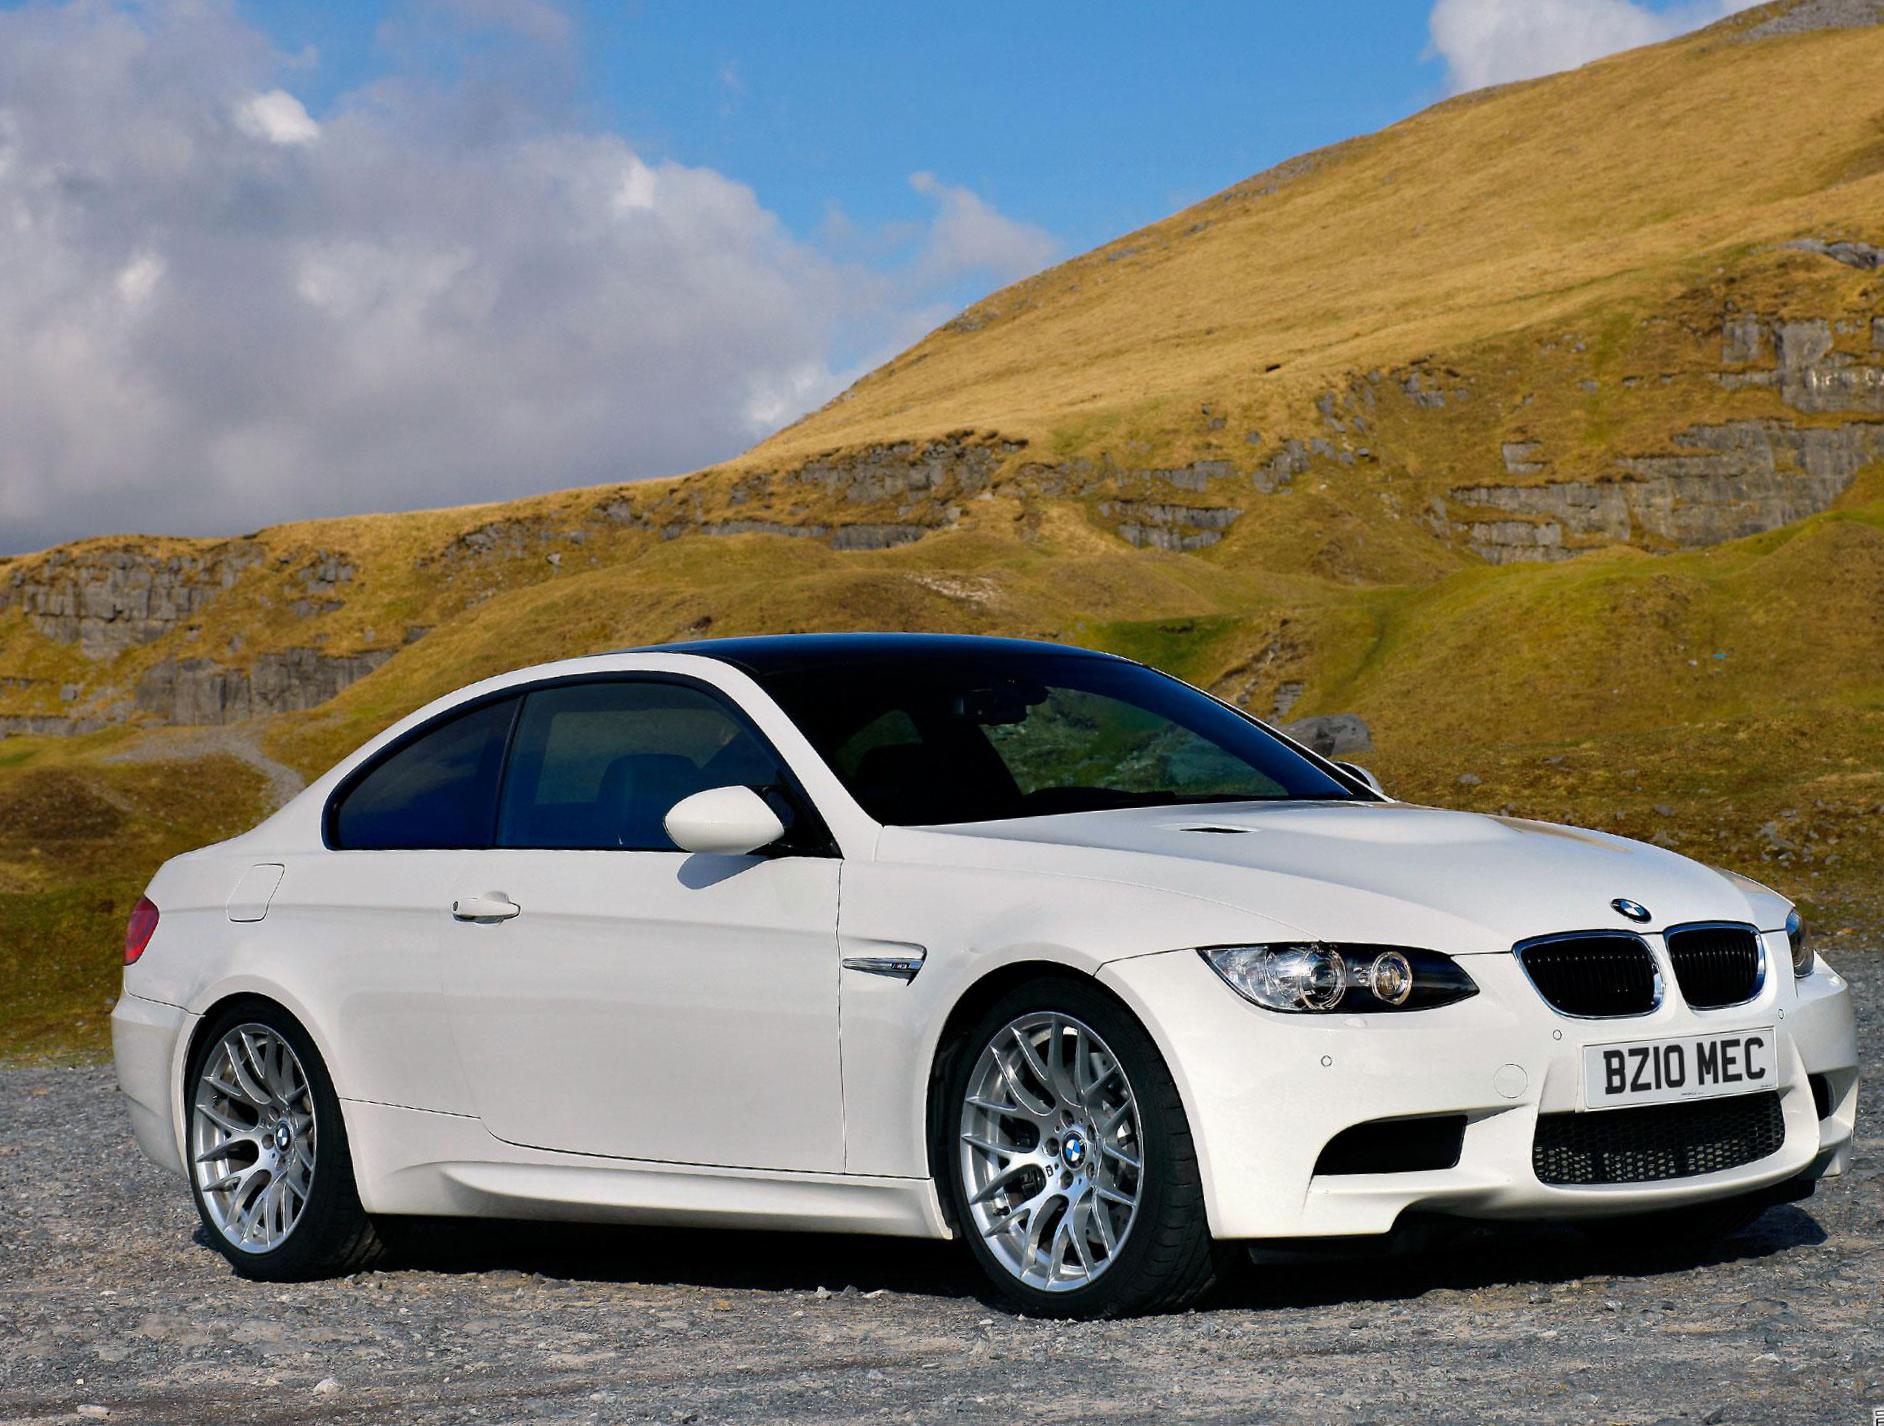 BMW M3 Coupe (E92) Photos and Specs. Photo: M3 Coupe (E92) BMW prices